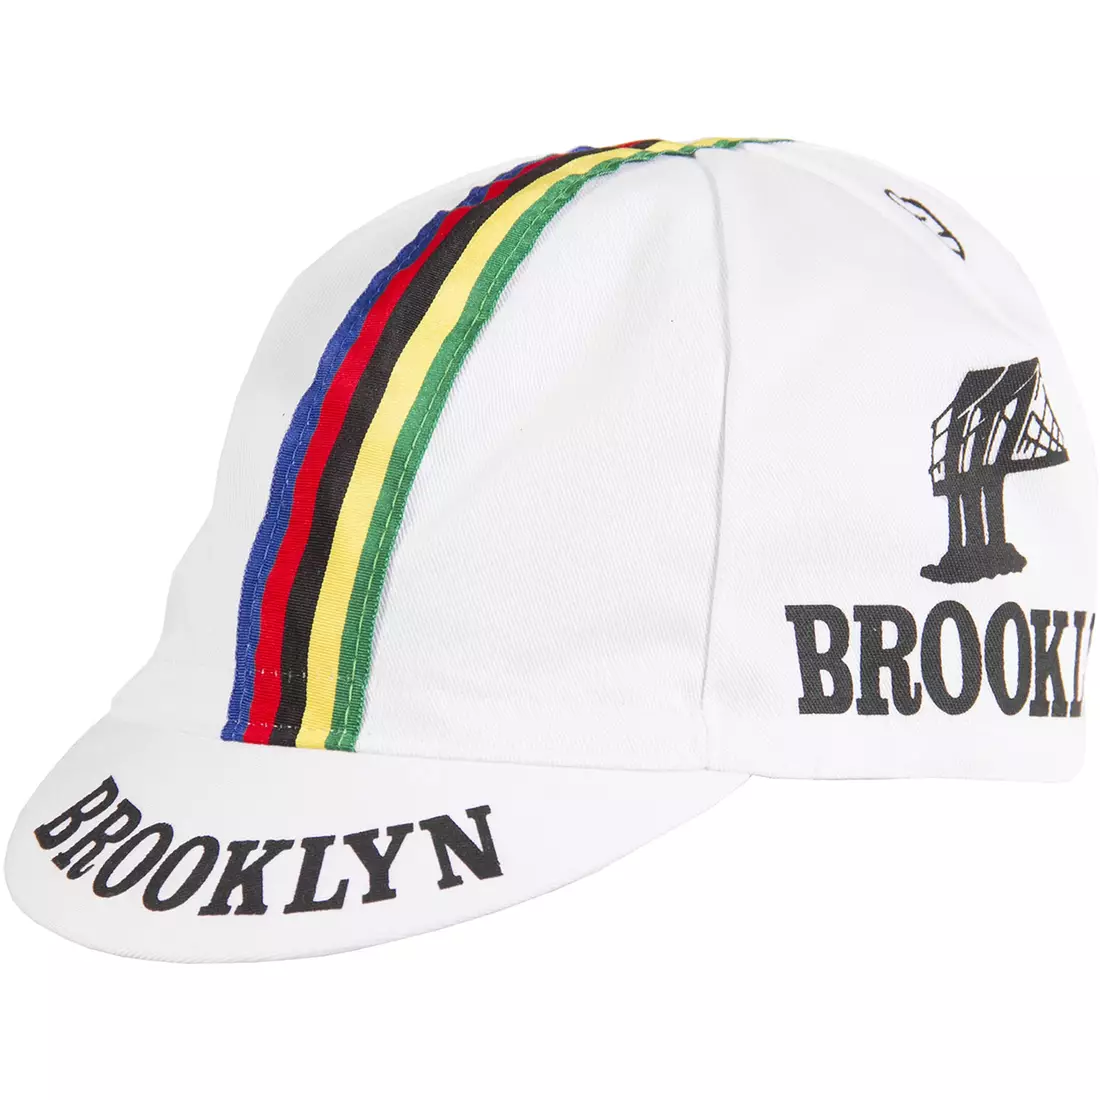 GIORDANA SS18 cycling cap - Brooklyn - White w/ Stripe tape GI-S6-COCA-BROK-WHIT one size